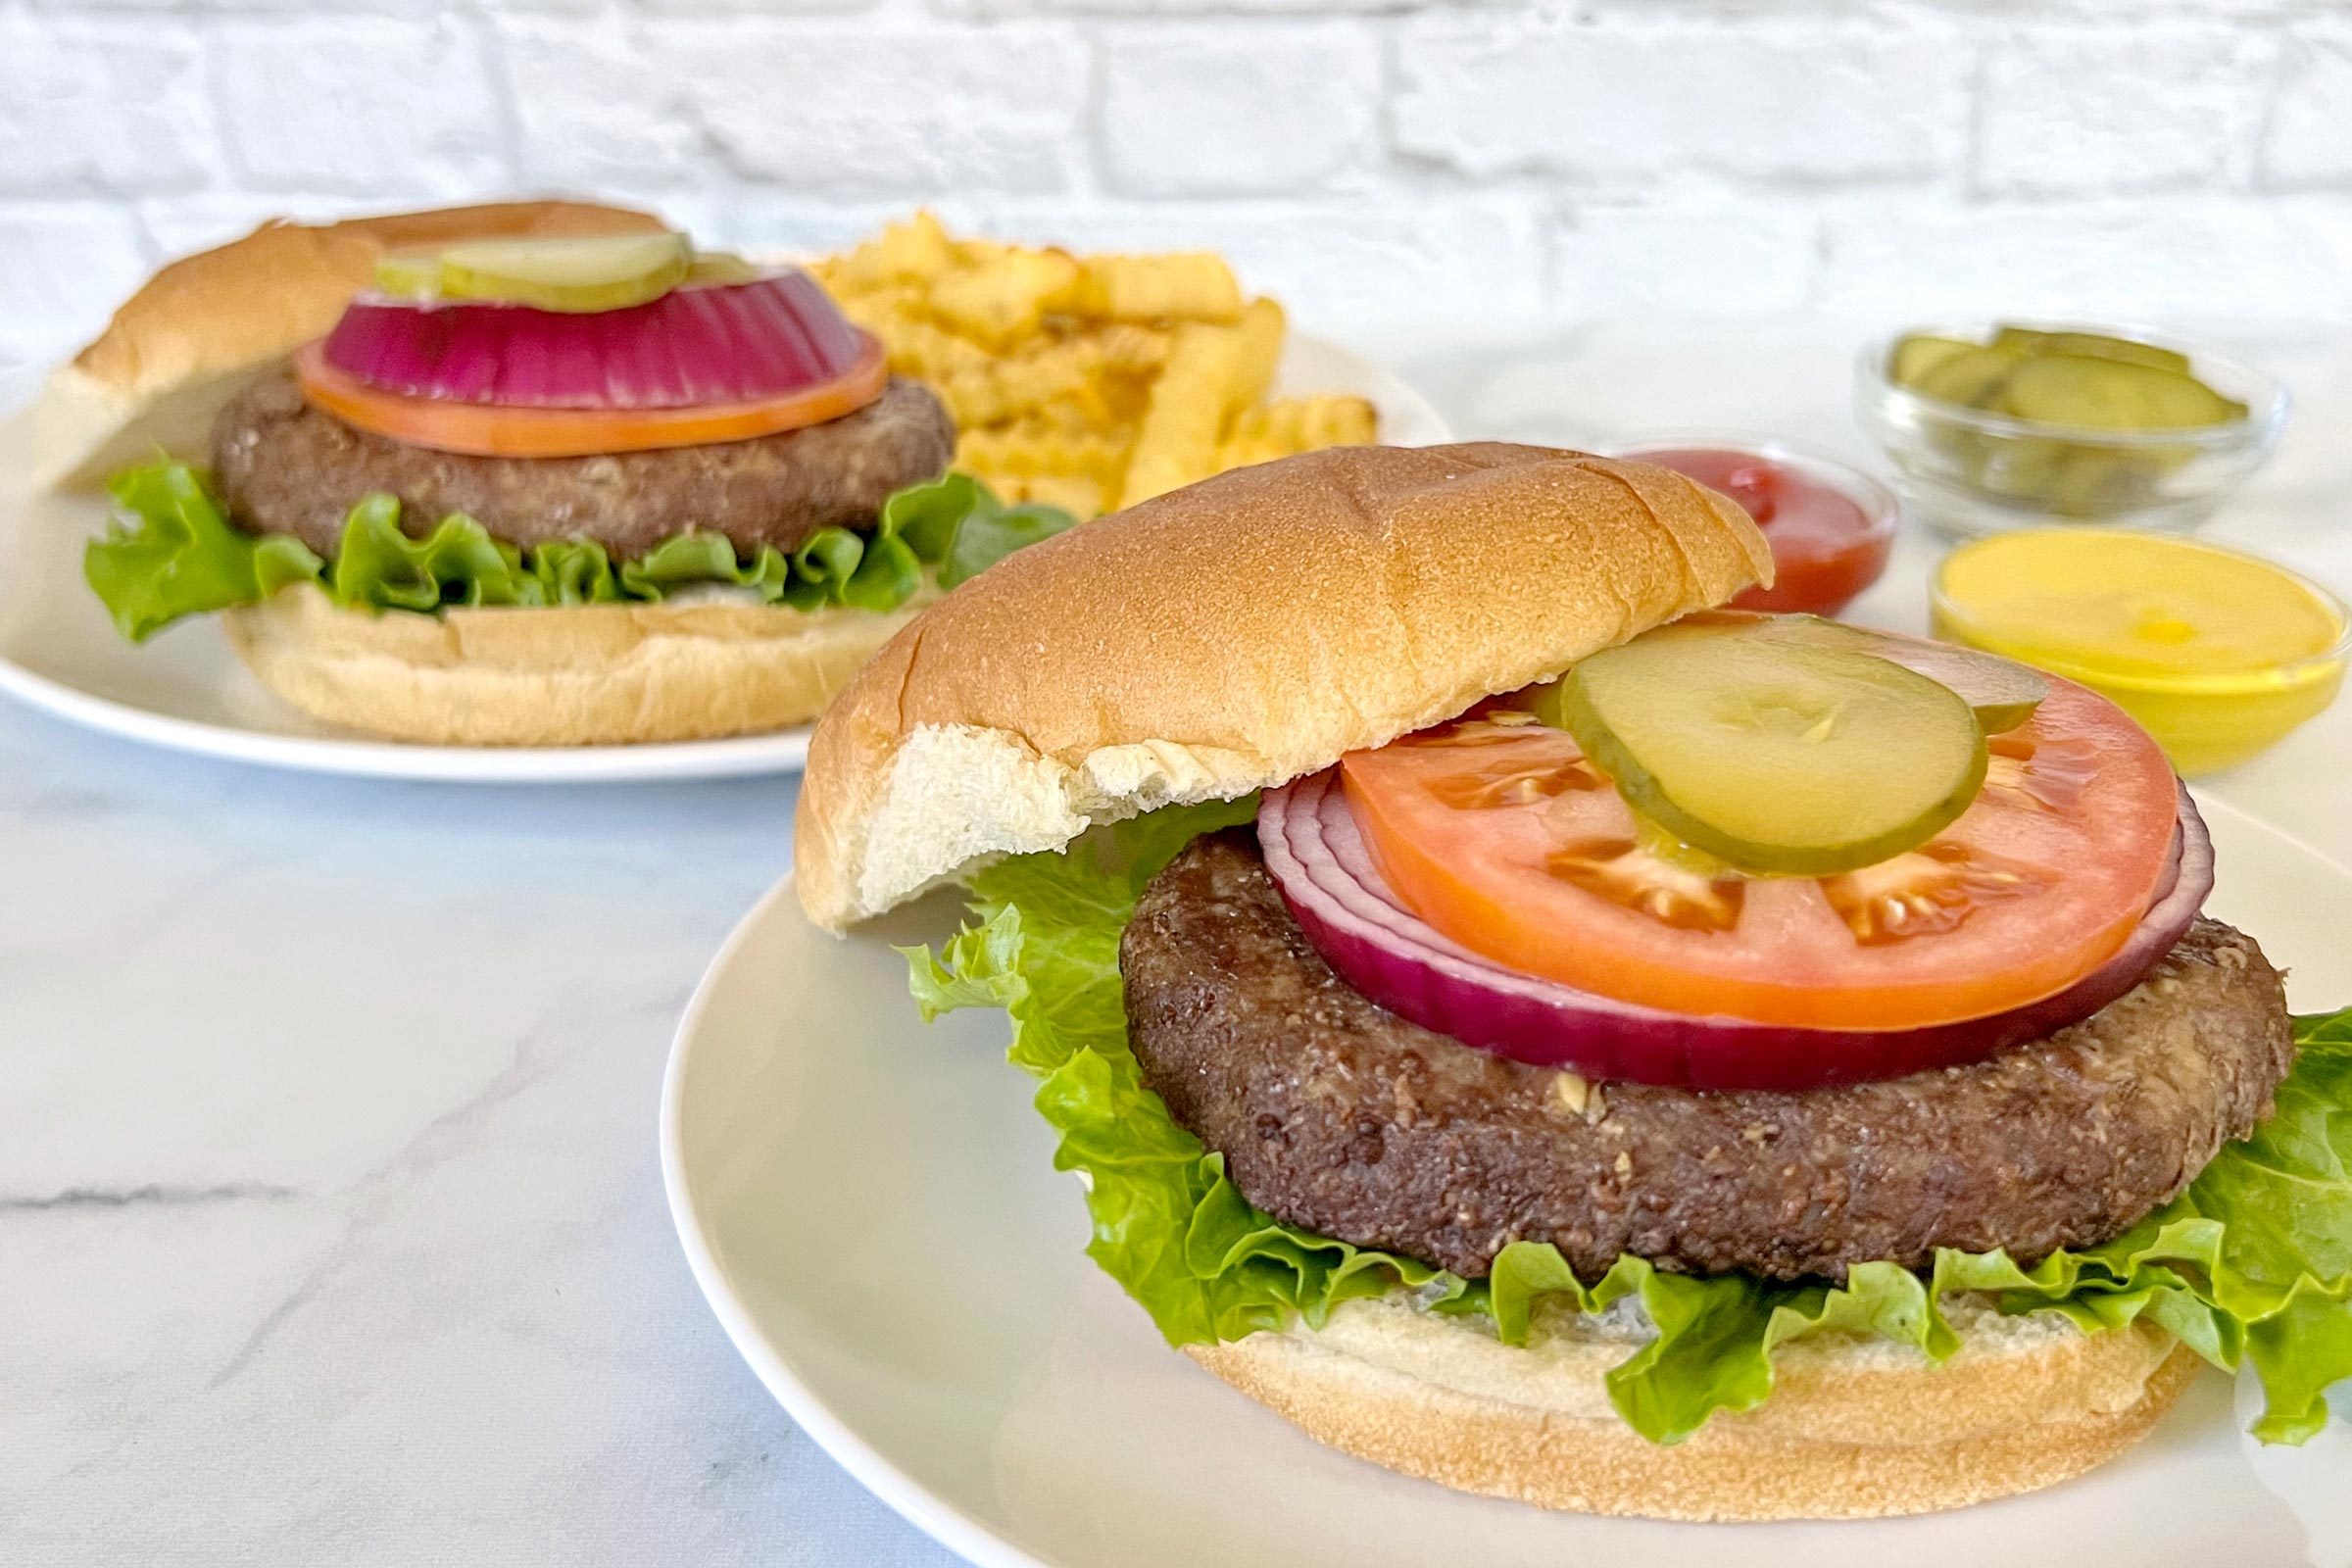 Bubba Burgers In Air Fryer - Food Lovin Family